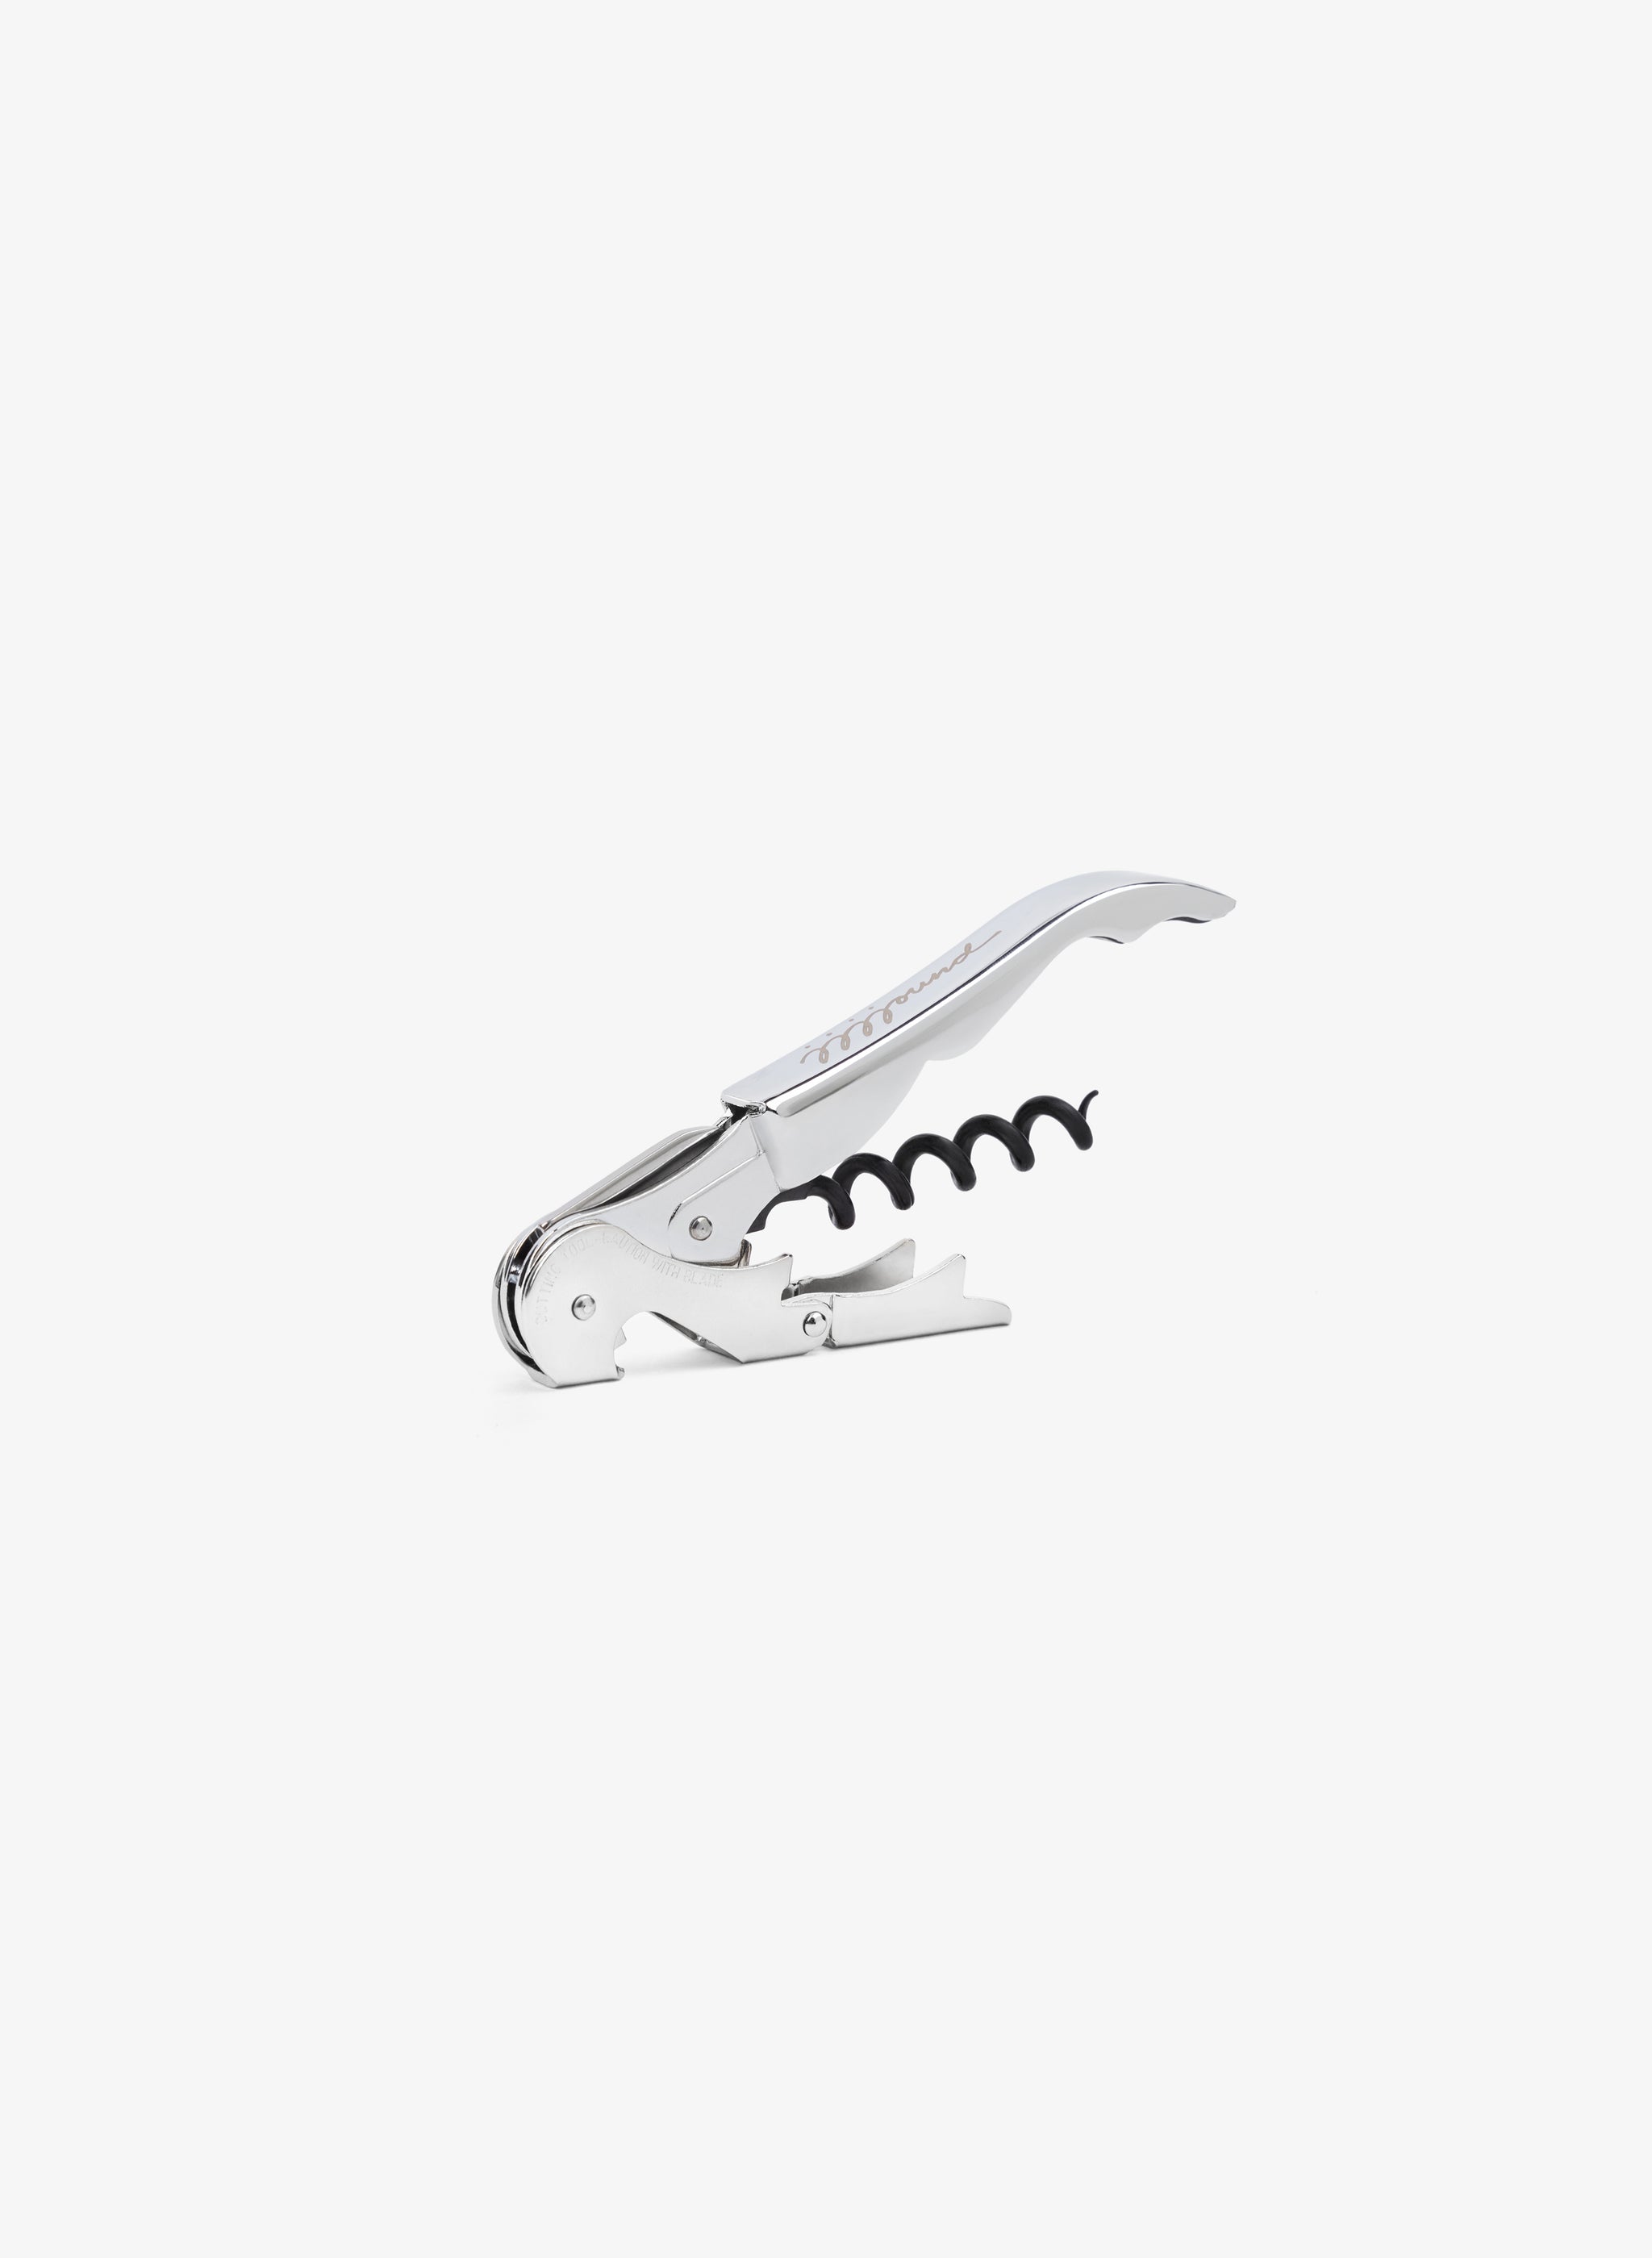 Pulltap's Corkscrew - Silver